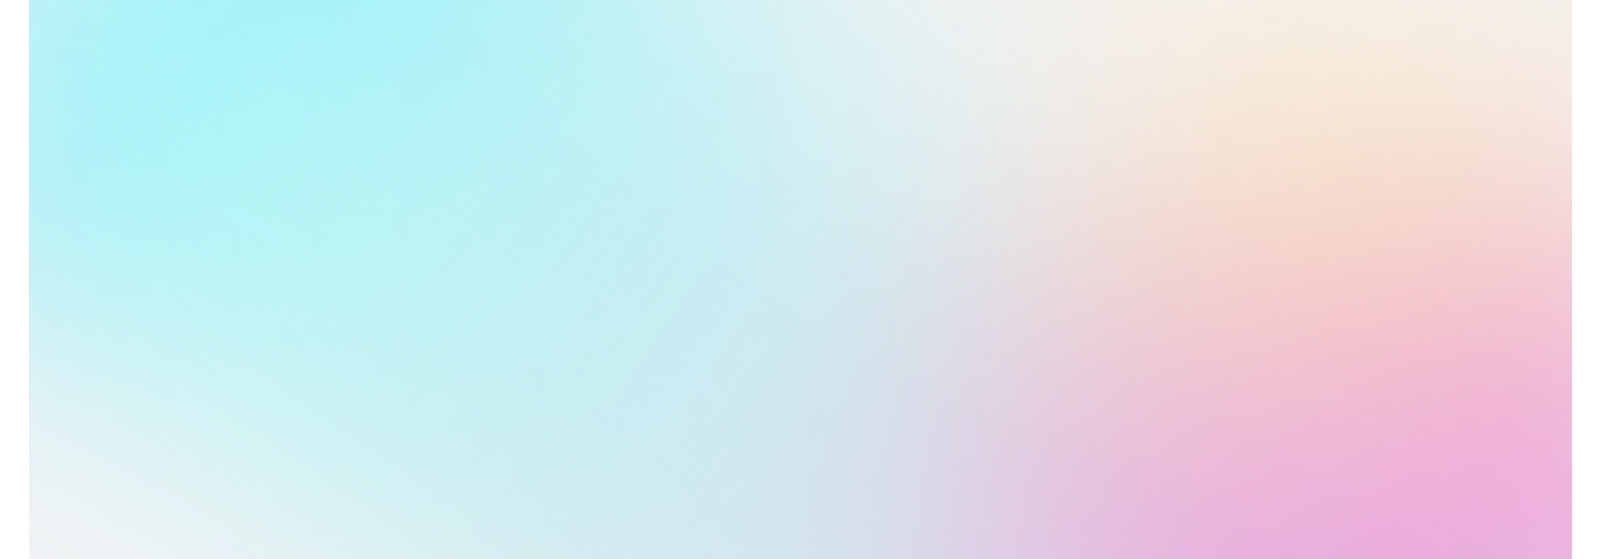 A light blue,ligh orange and pink gradient